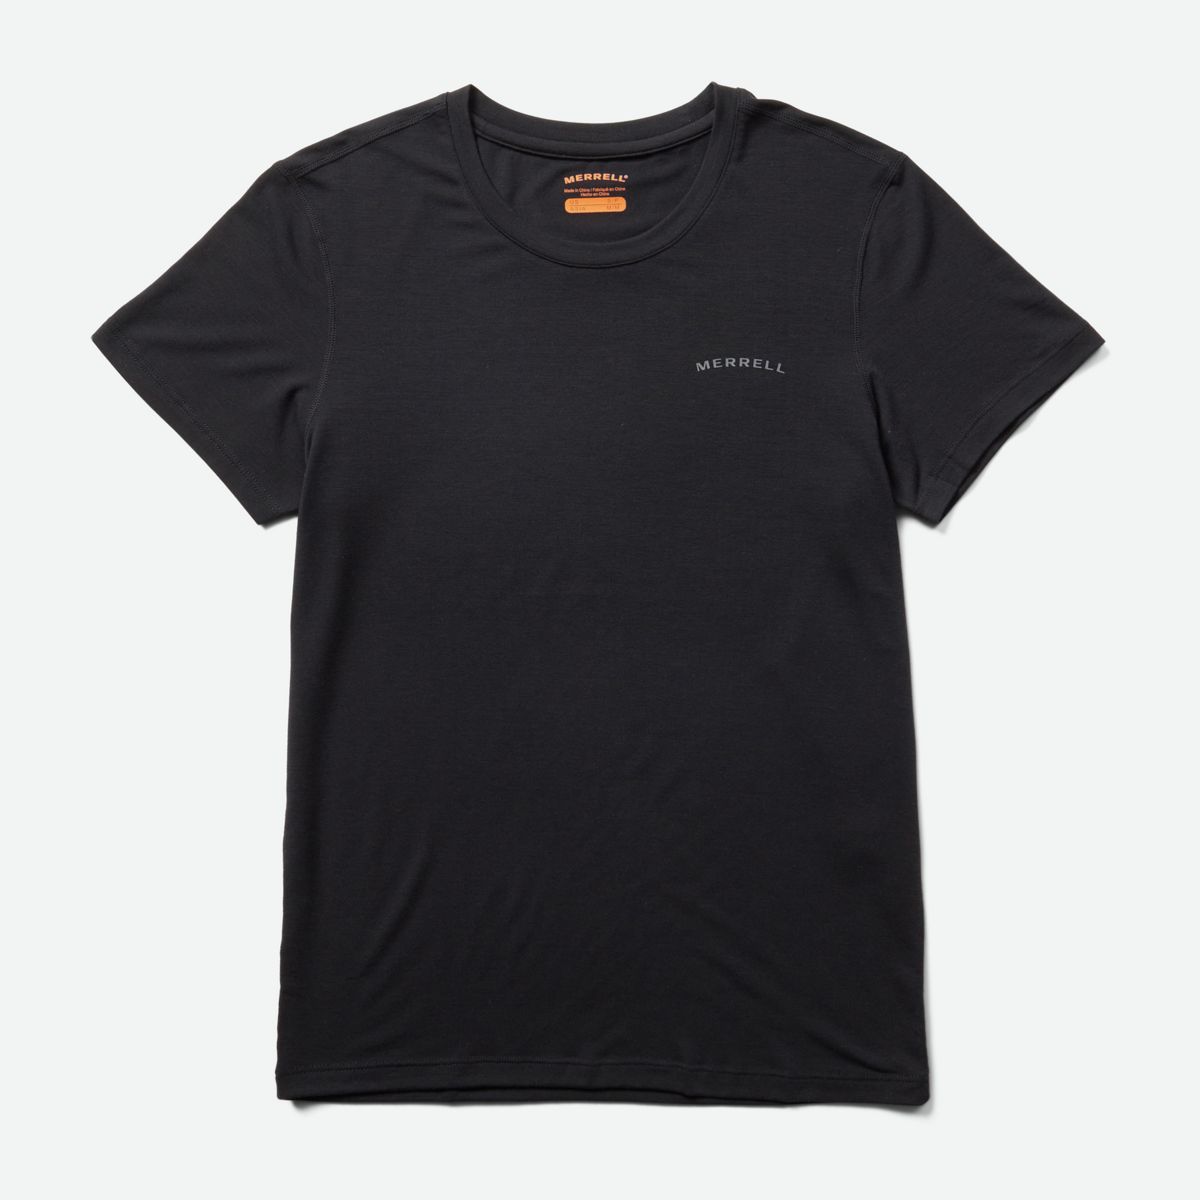 Men's Black Calvin Klein T-Shirts: 100+ Items in Stock